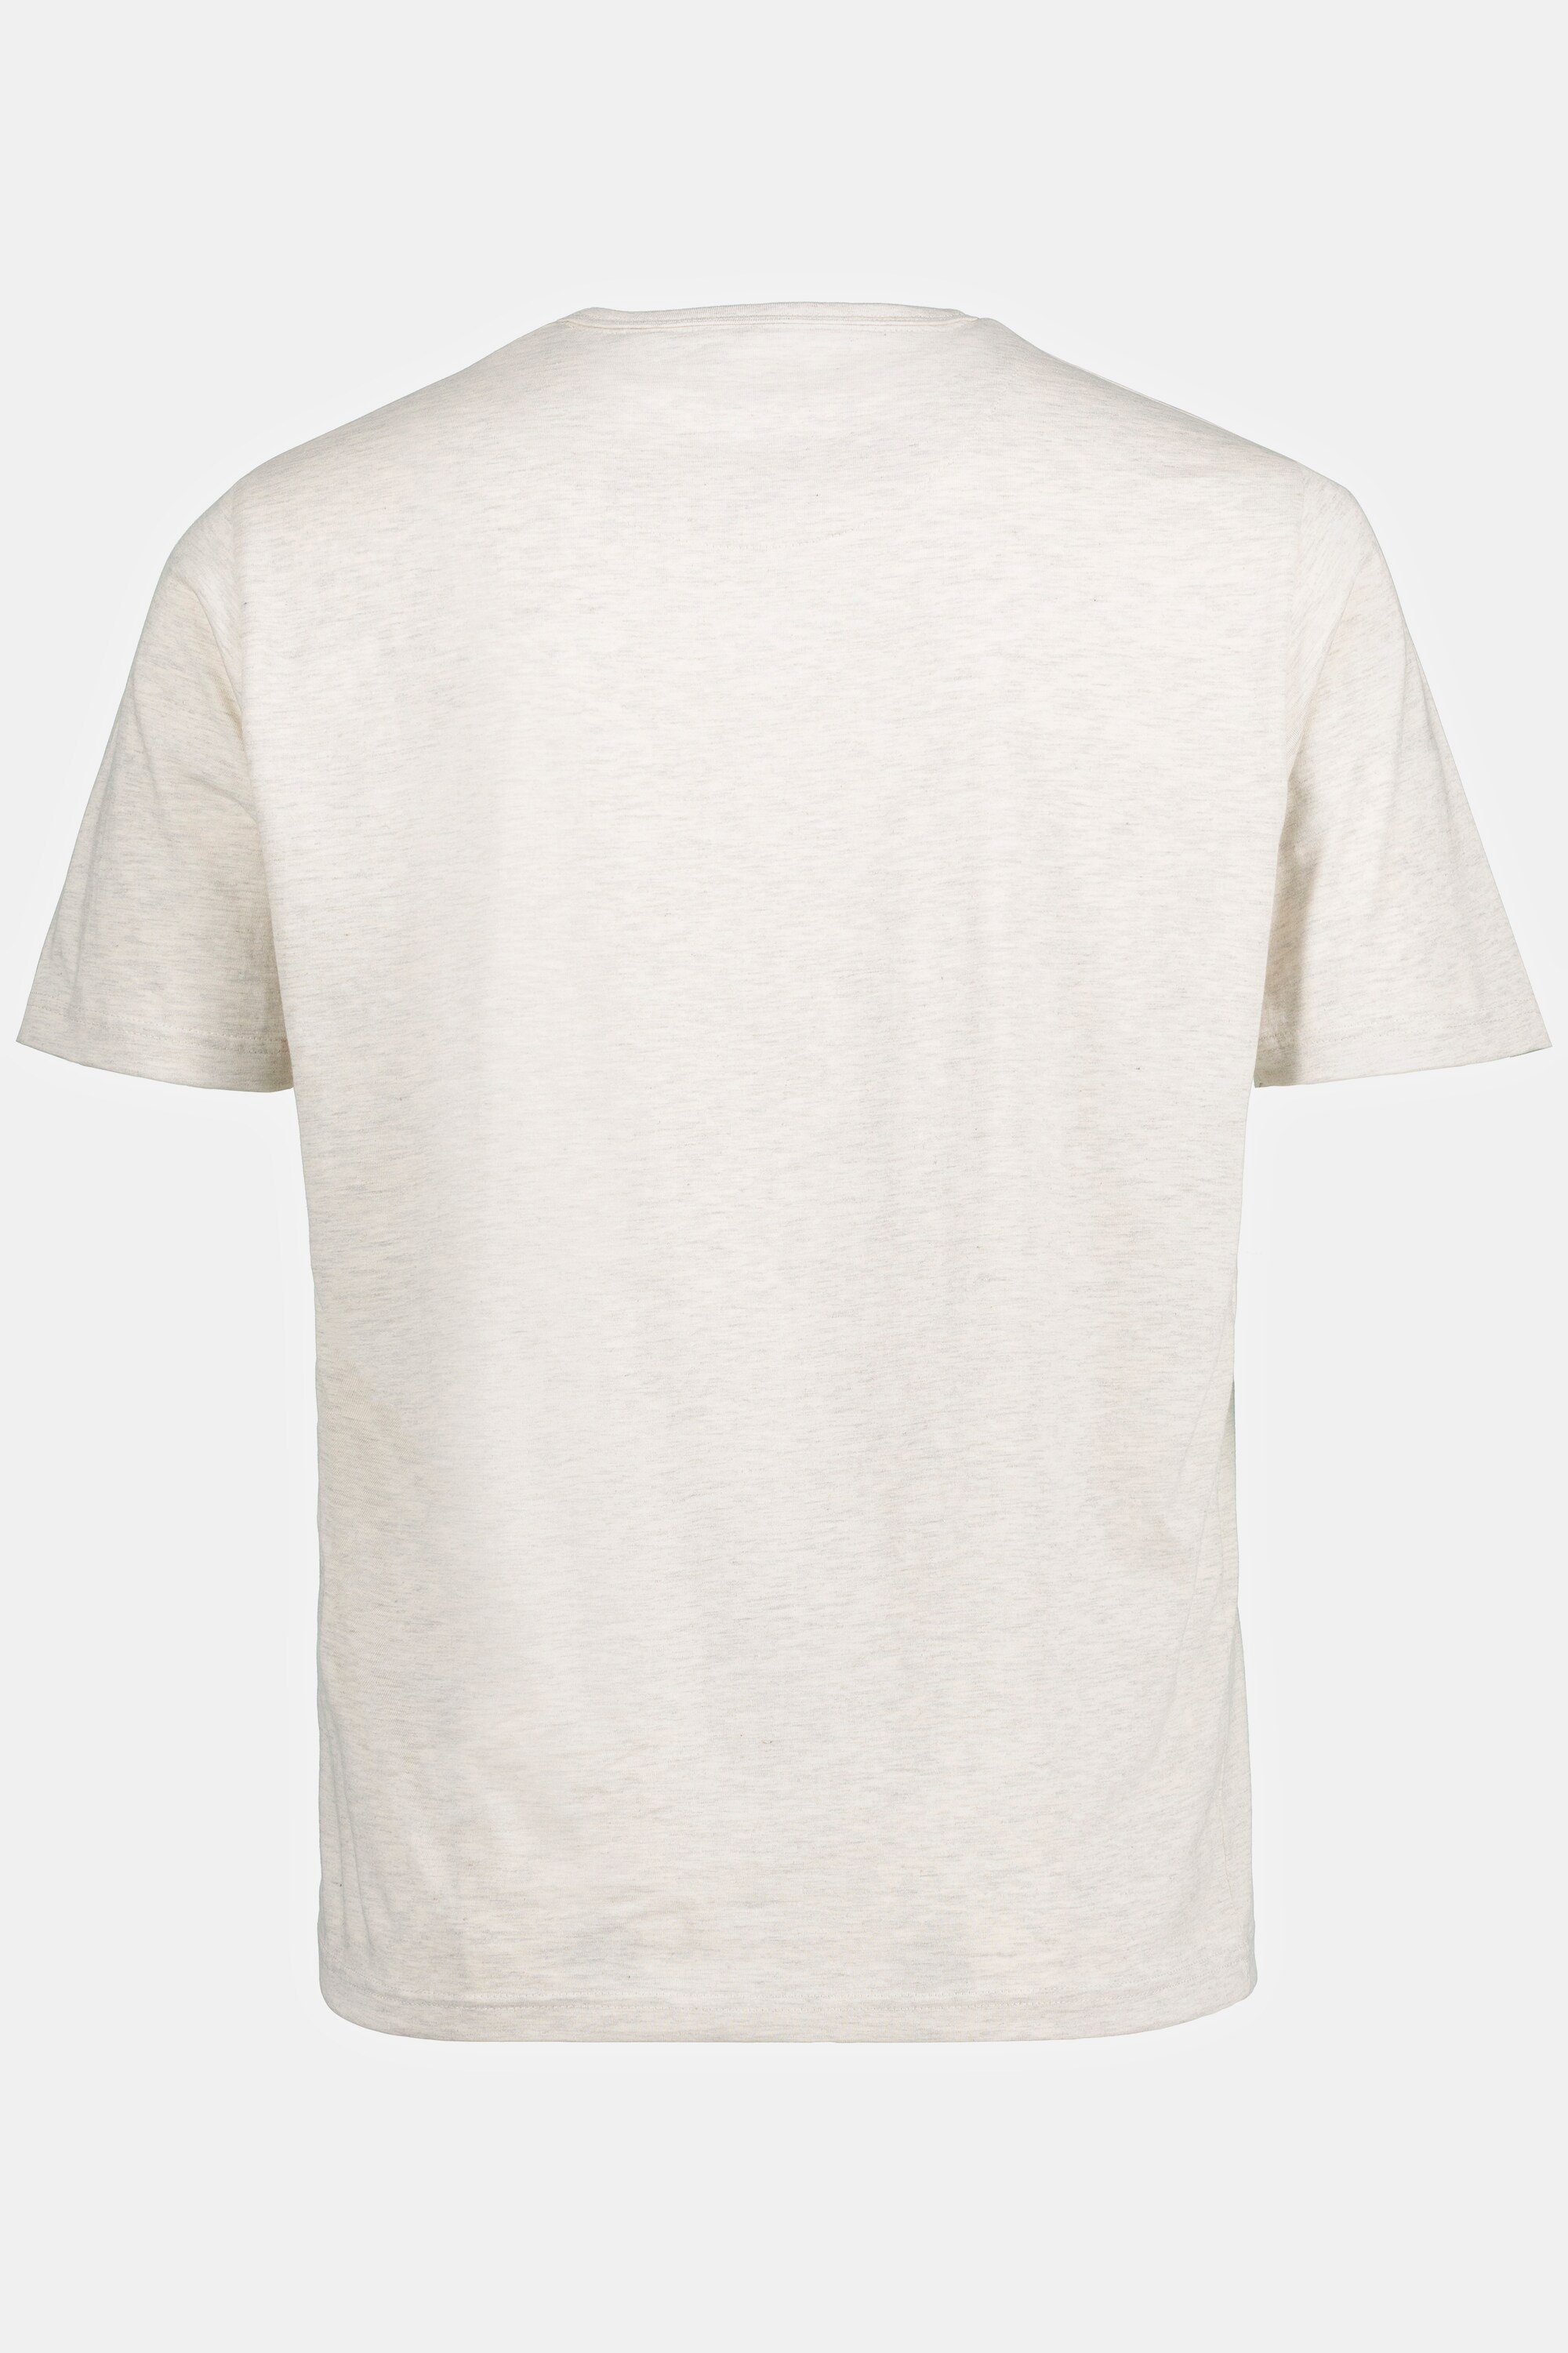 Print JP1880 Trekking-Shirt T-Shirt Halbarm Outdoor